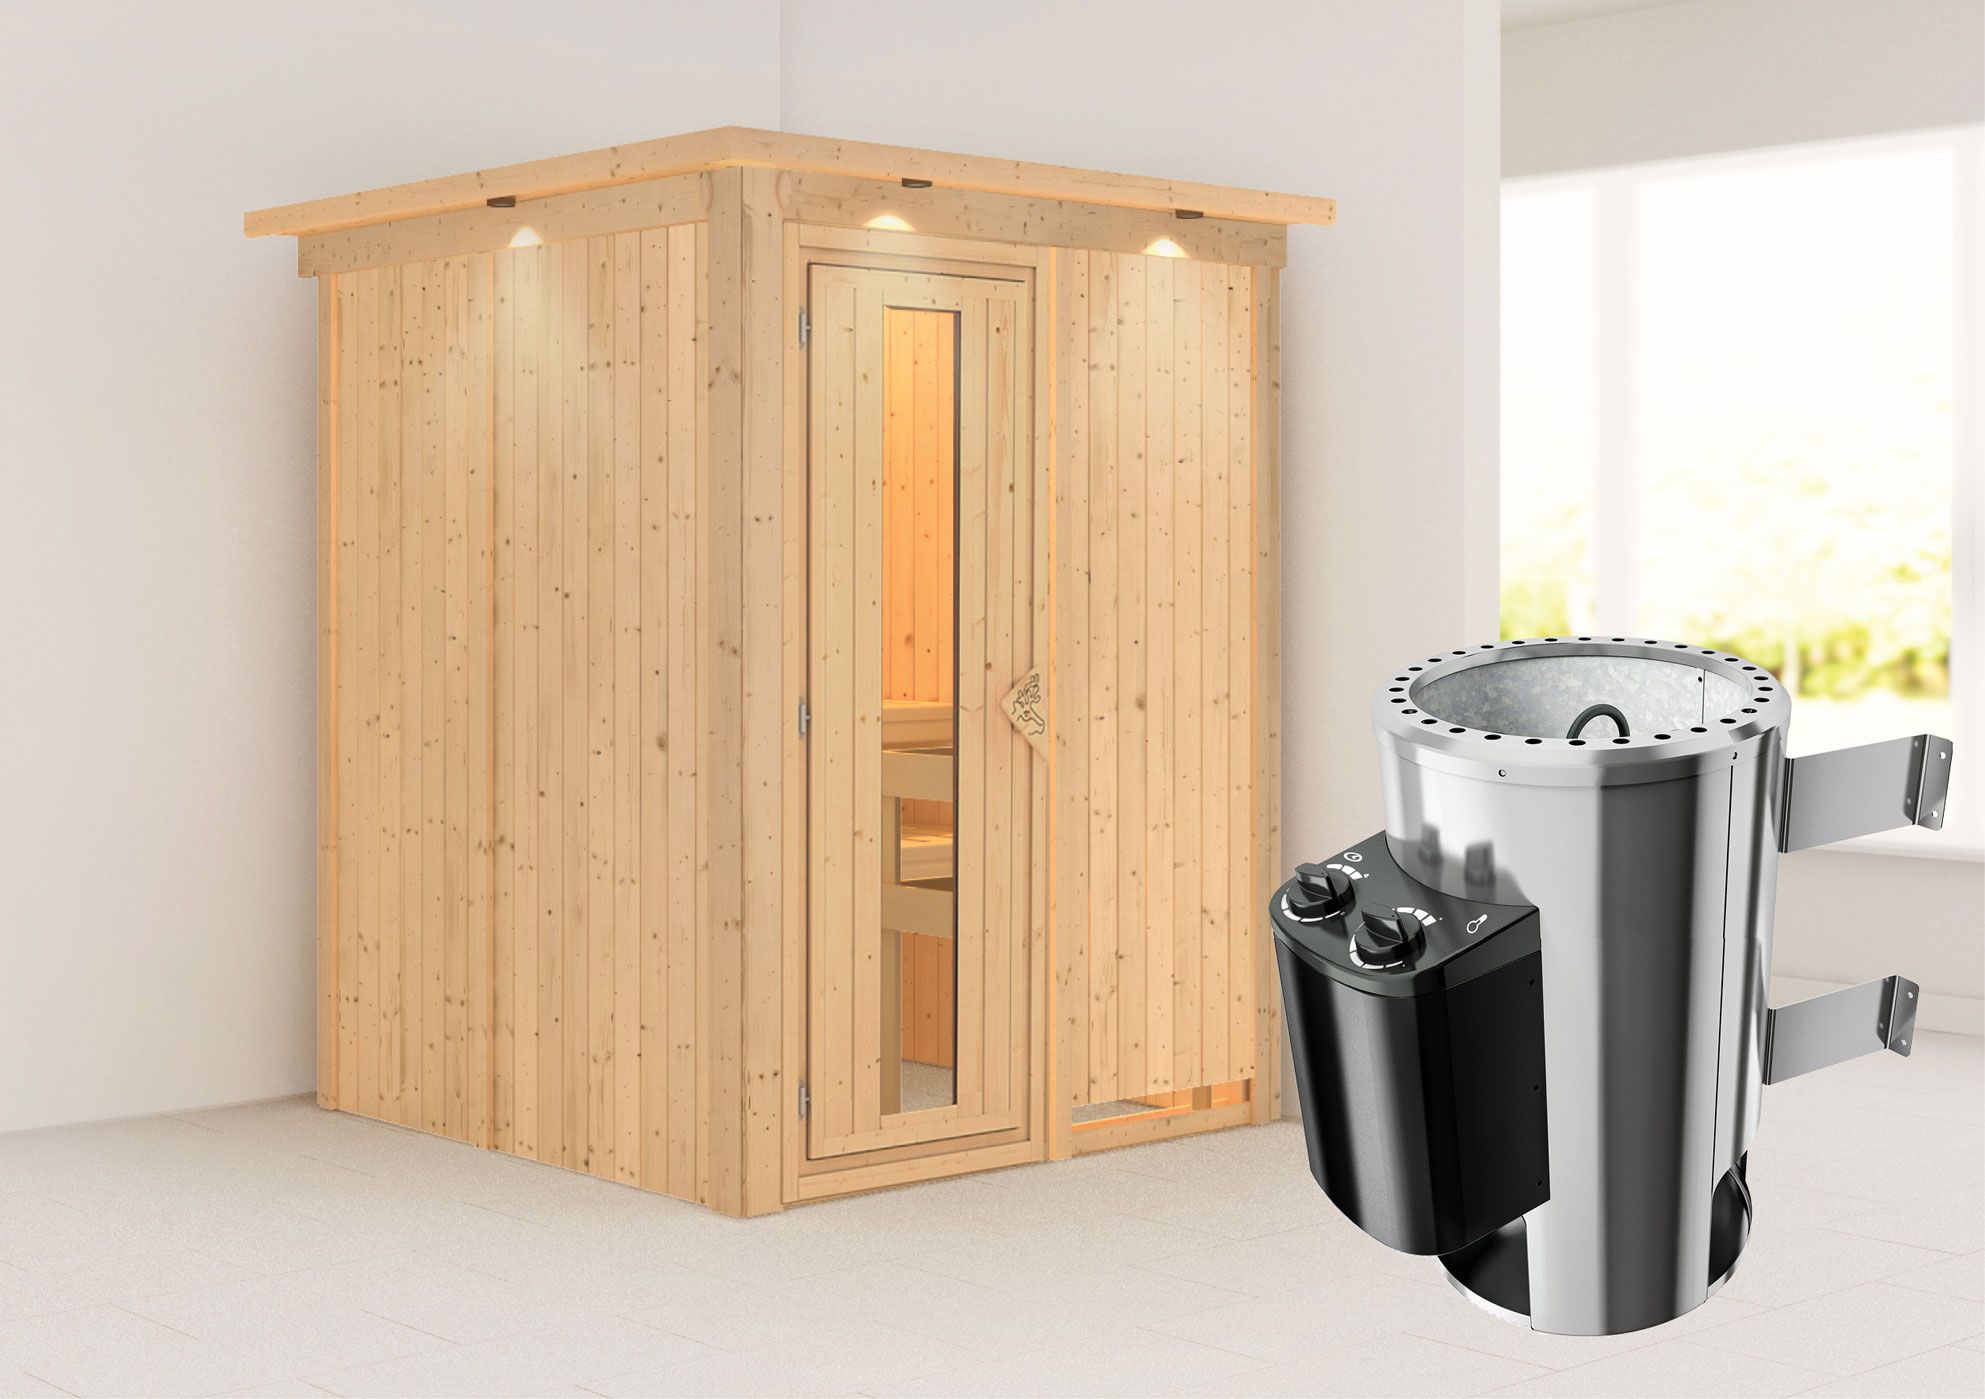 SET-sauna "Joran" met energiebesparende deur, rand en 3,6 kW kachel - 165 x 165 x 202 cm (B x D x H)